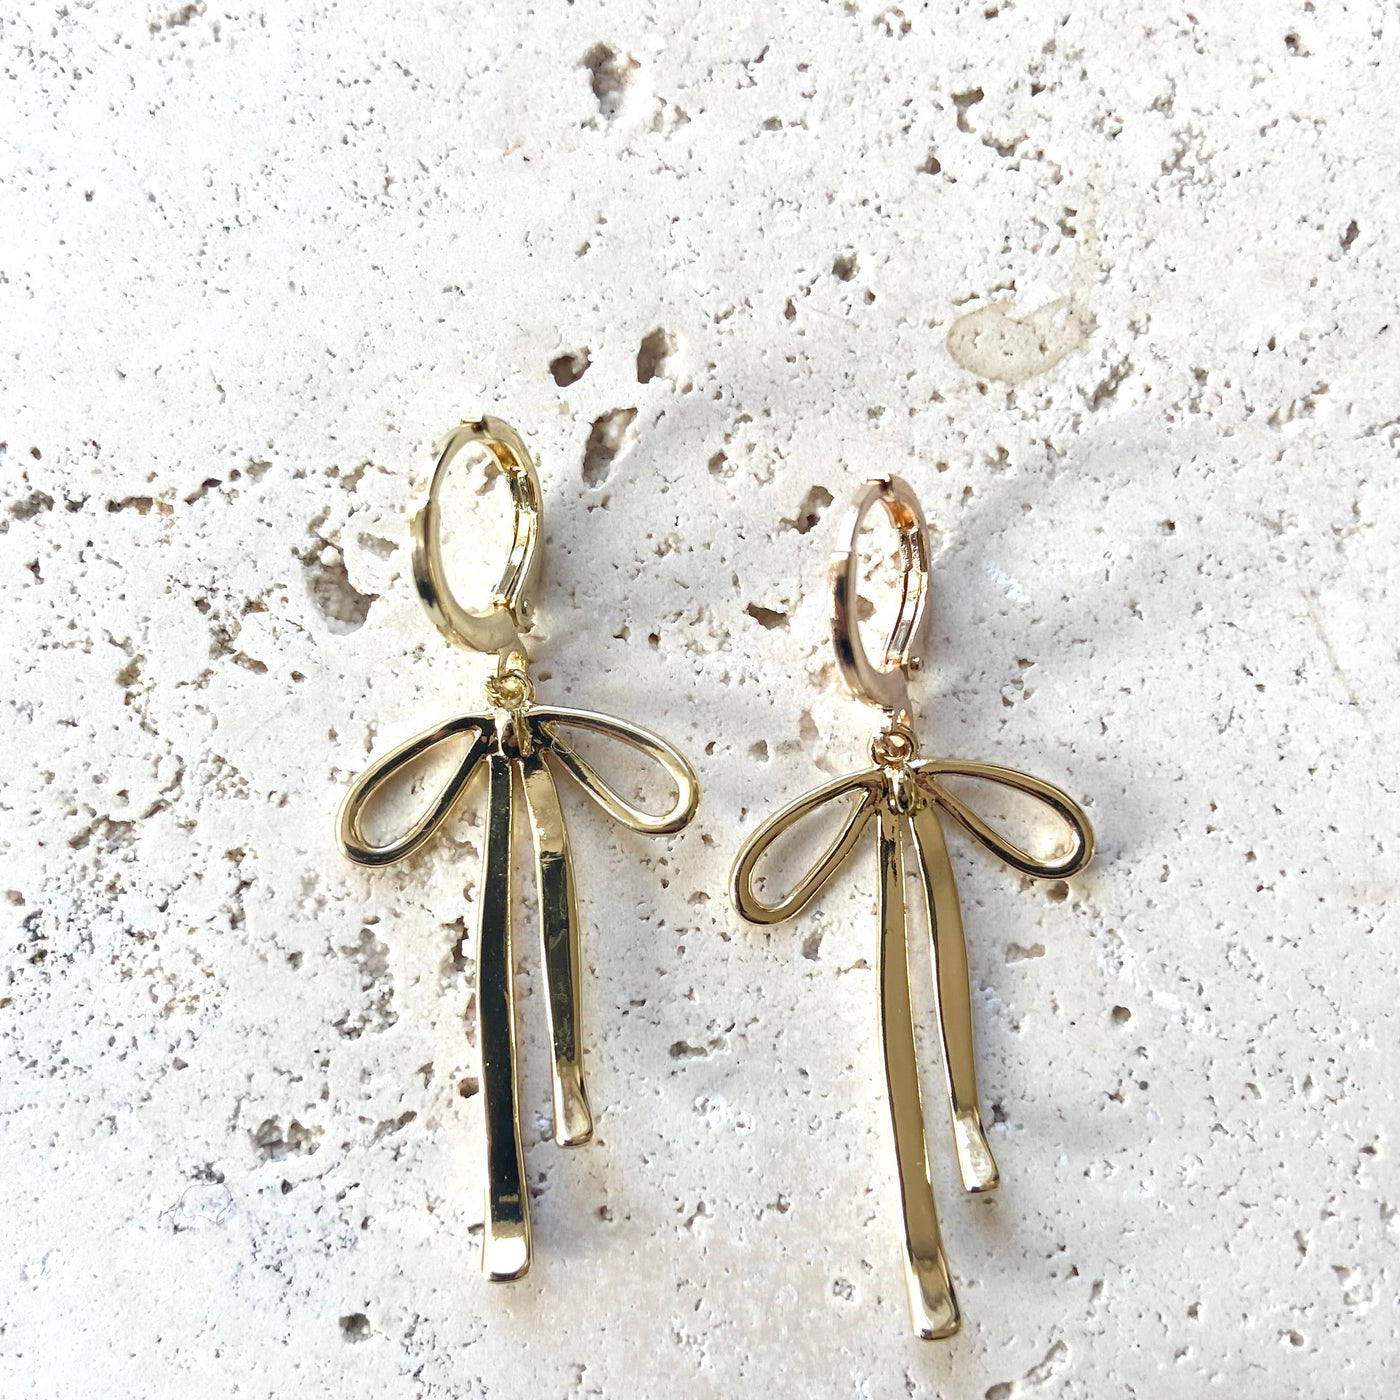 VB&CO Designs Handmade Jewelry Bow Earrings - Gold